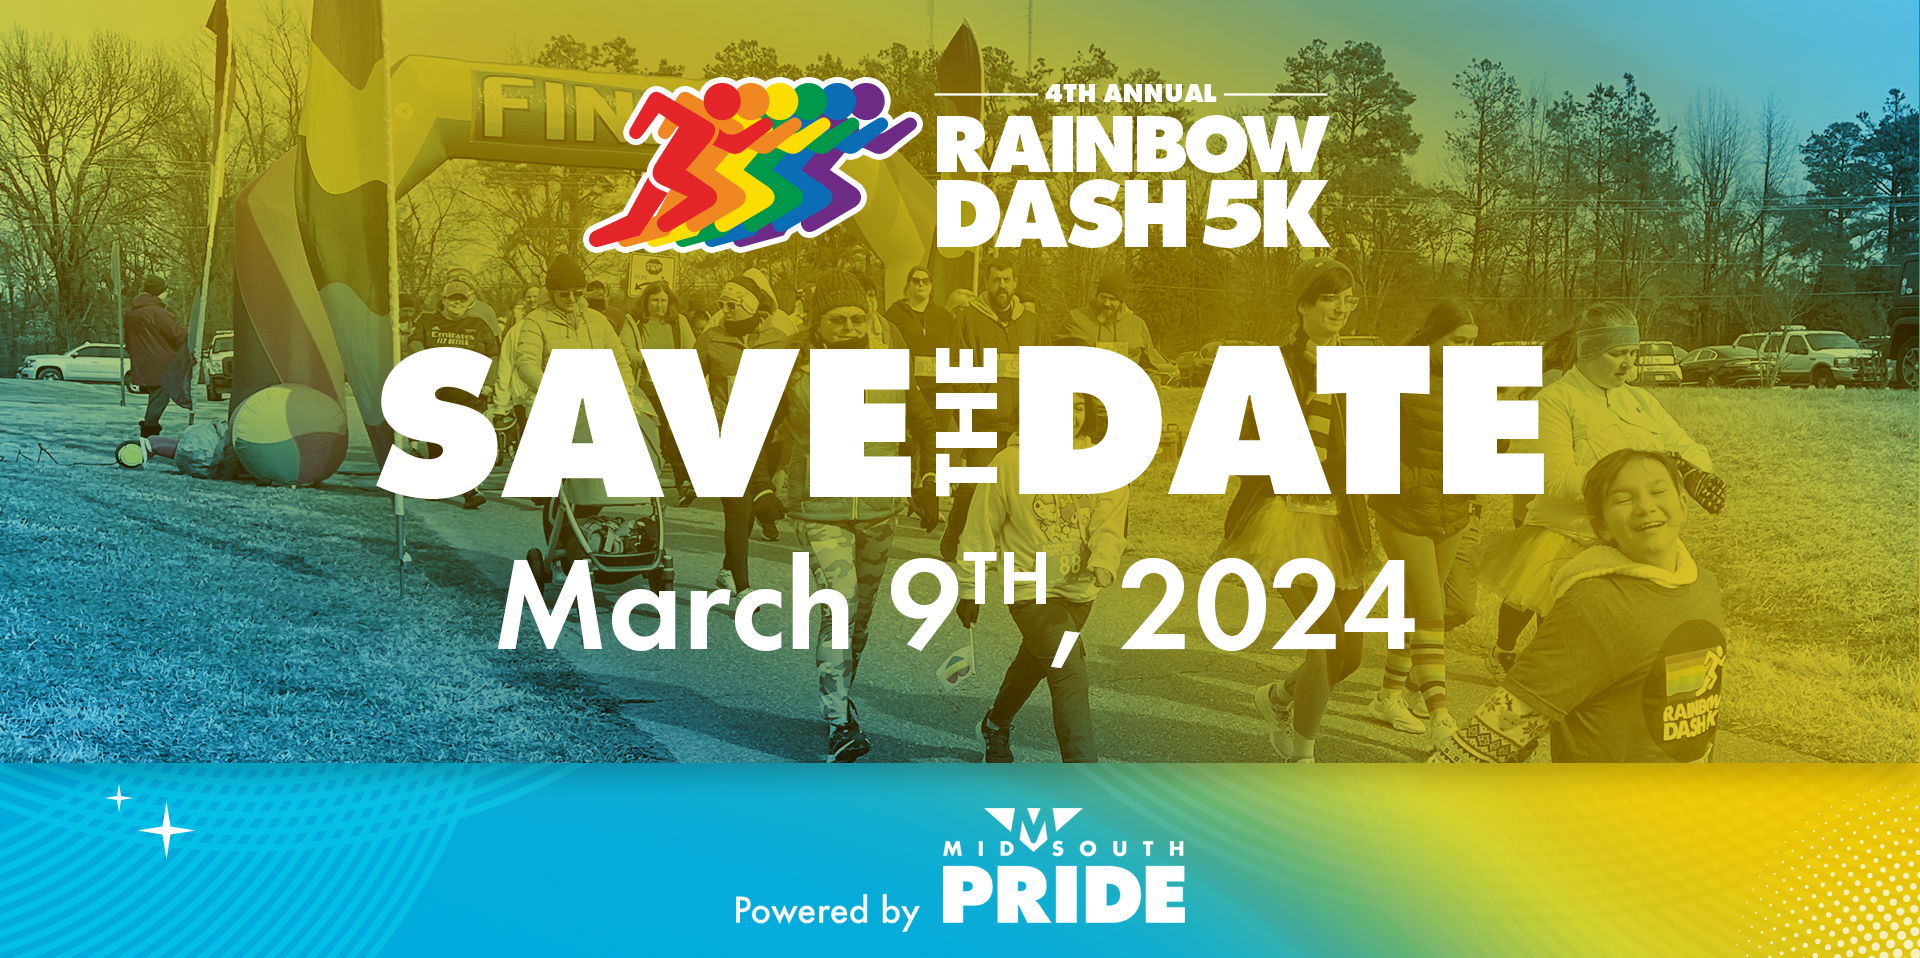  4th Annual Rainbow Dash 5K promotional image